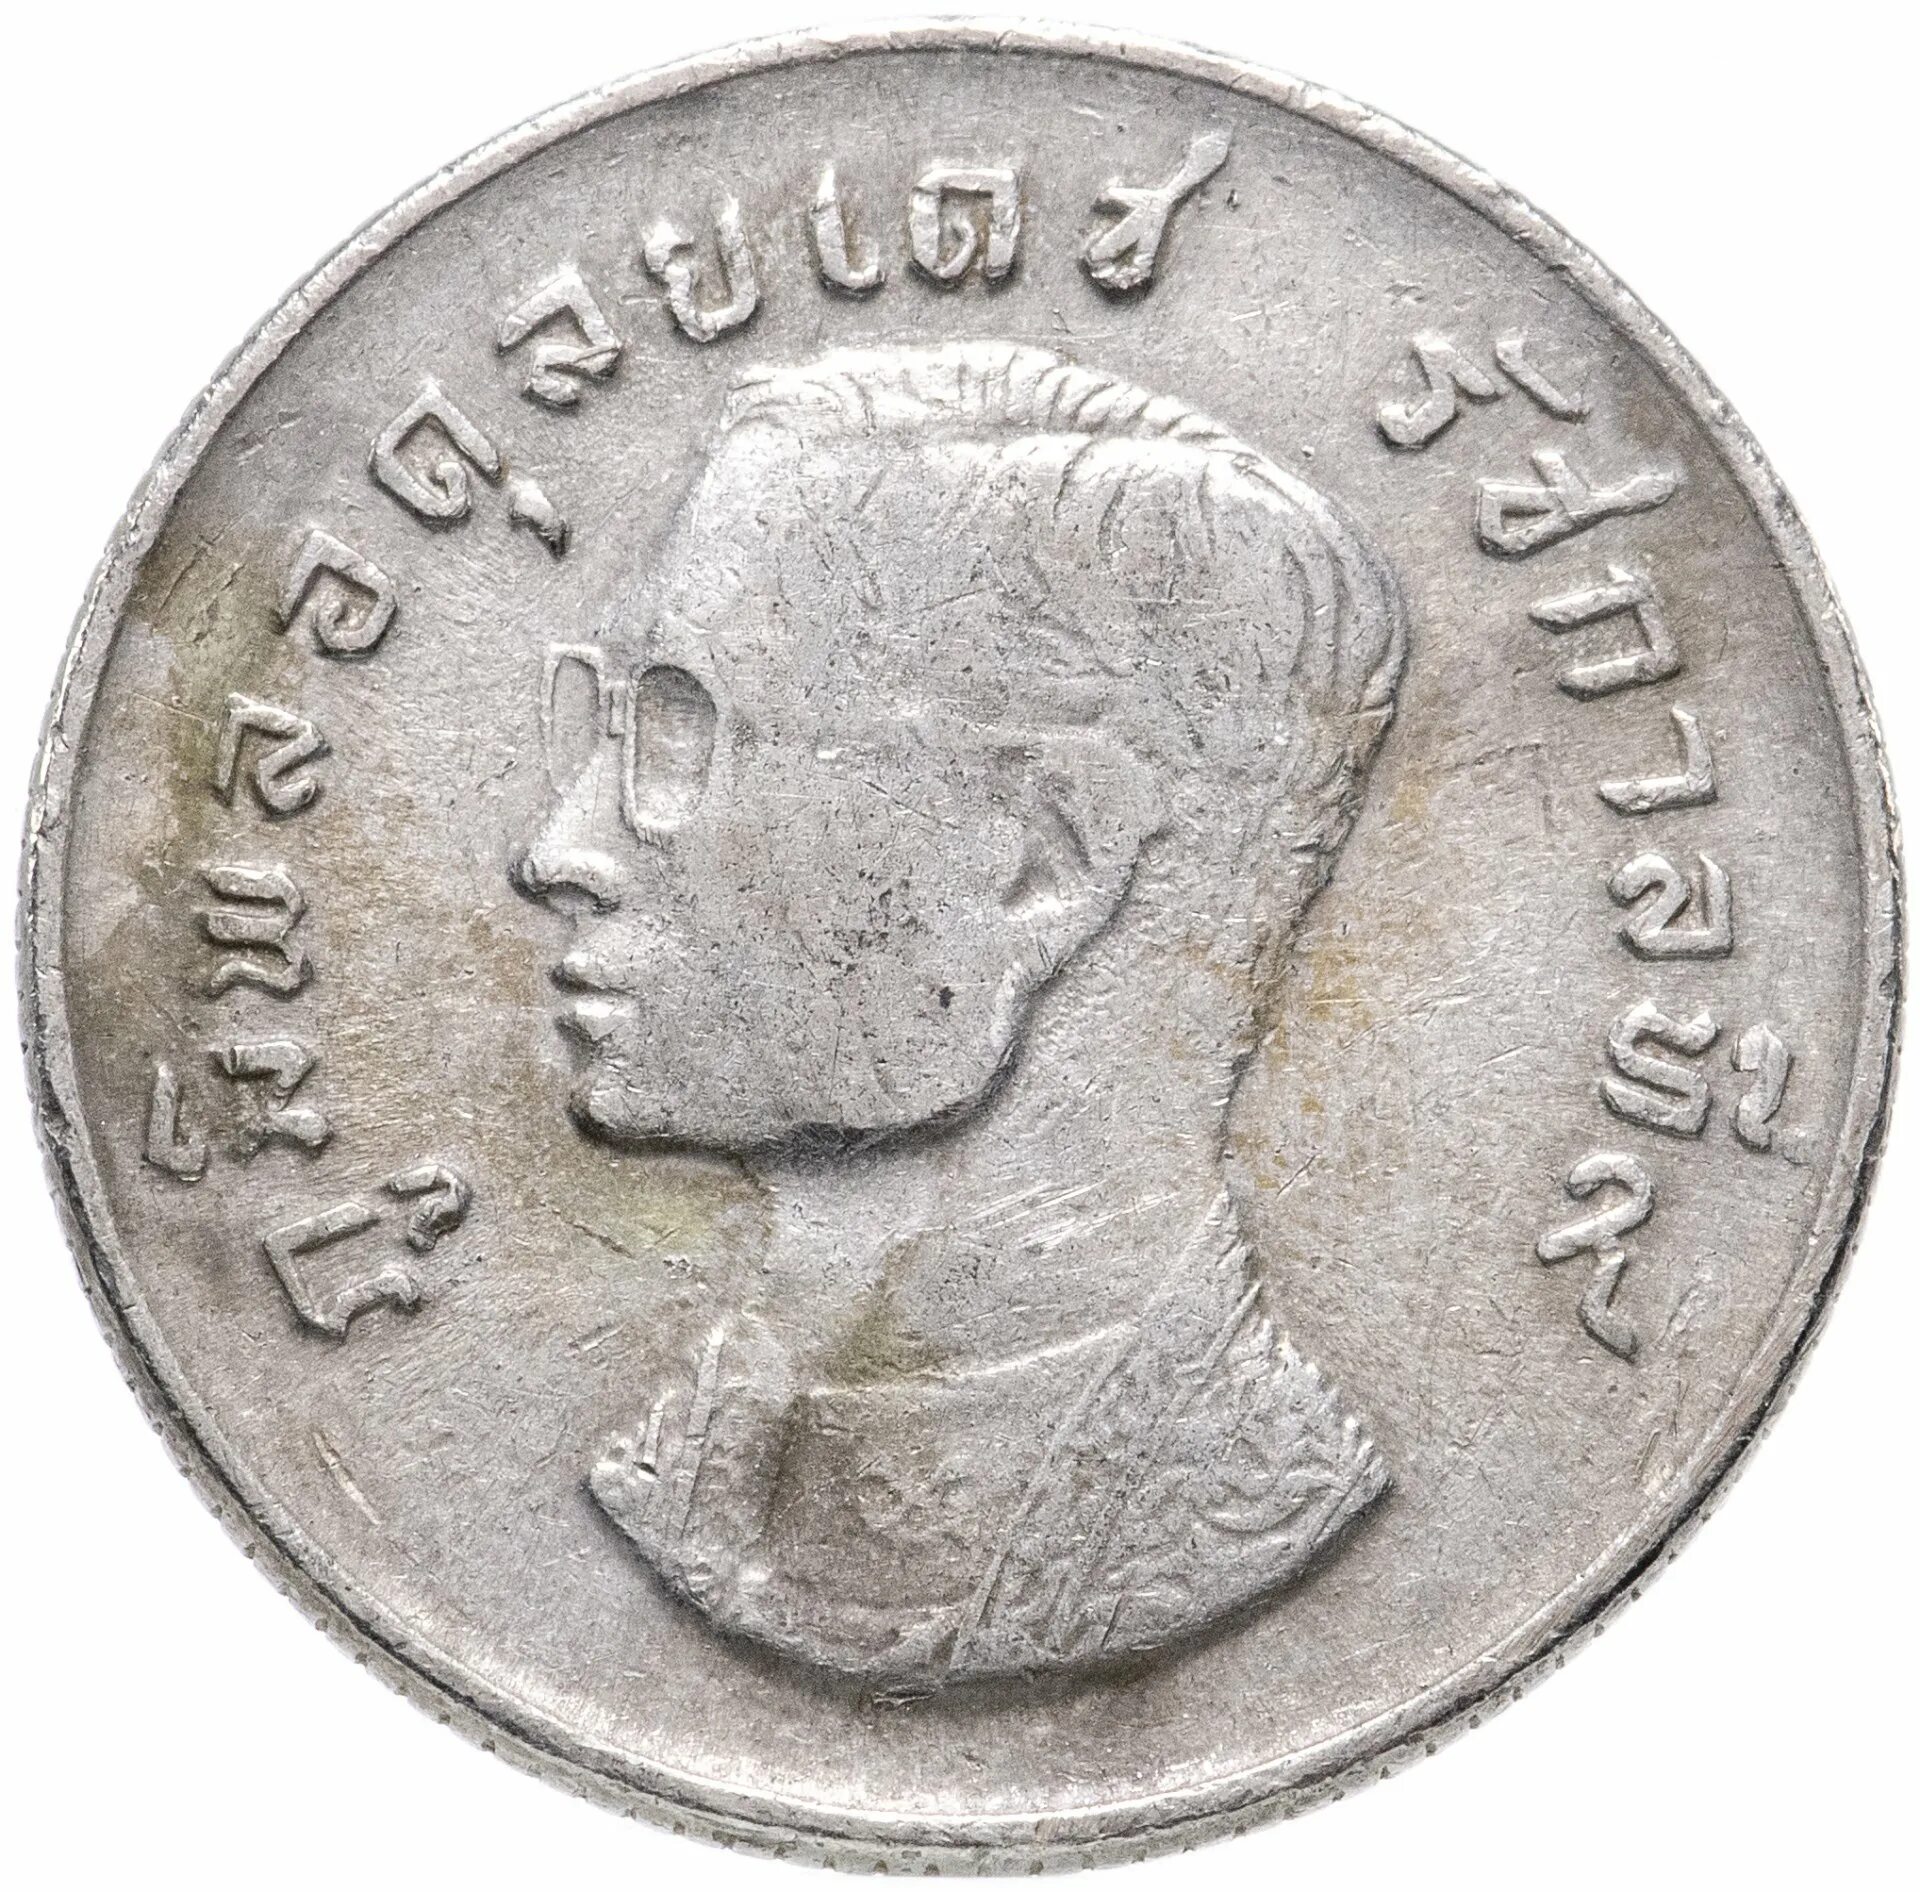 Монета Тайланда 1 бат. Монеты Таиланда 1 бат 2020. 1 Бат 1858. 5 Бат монета.